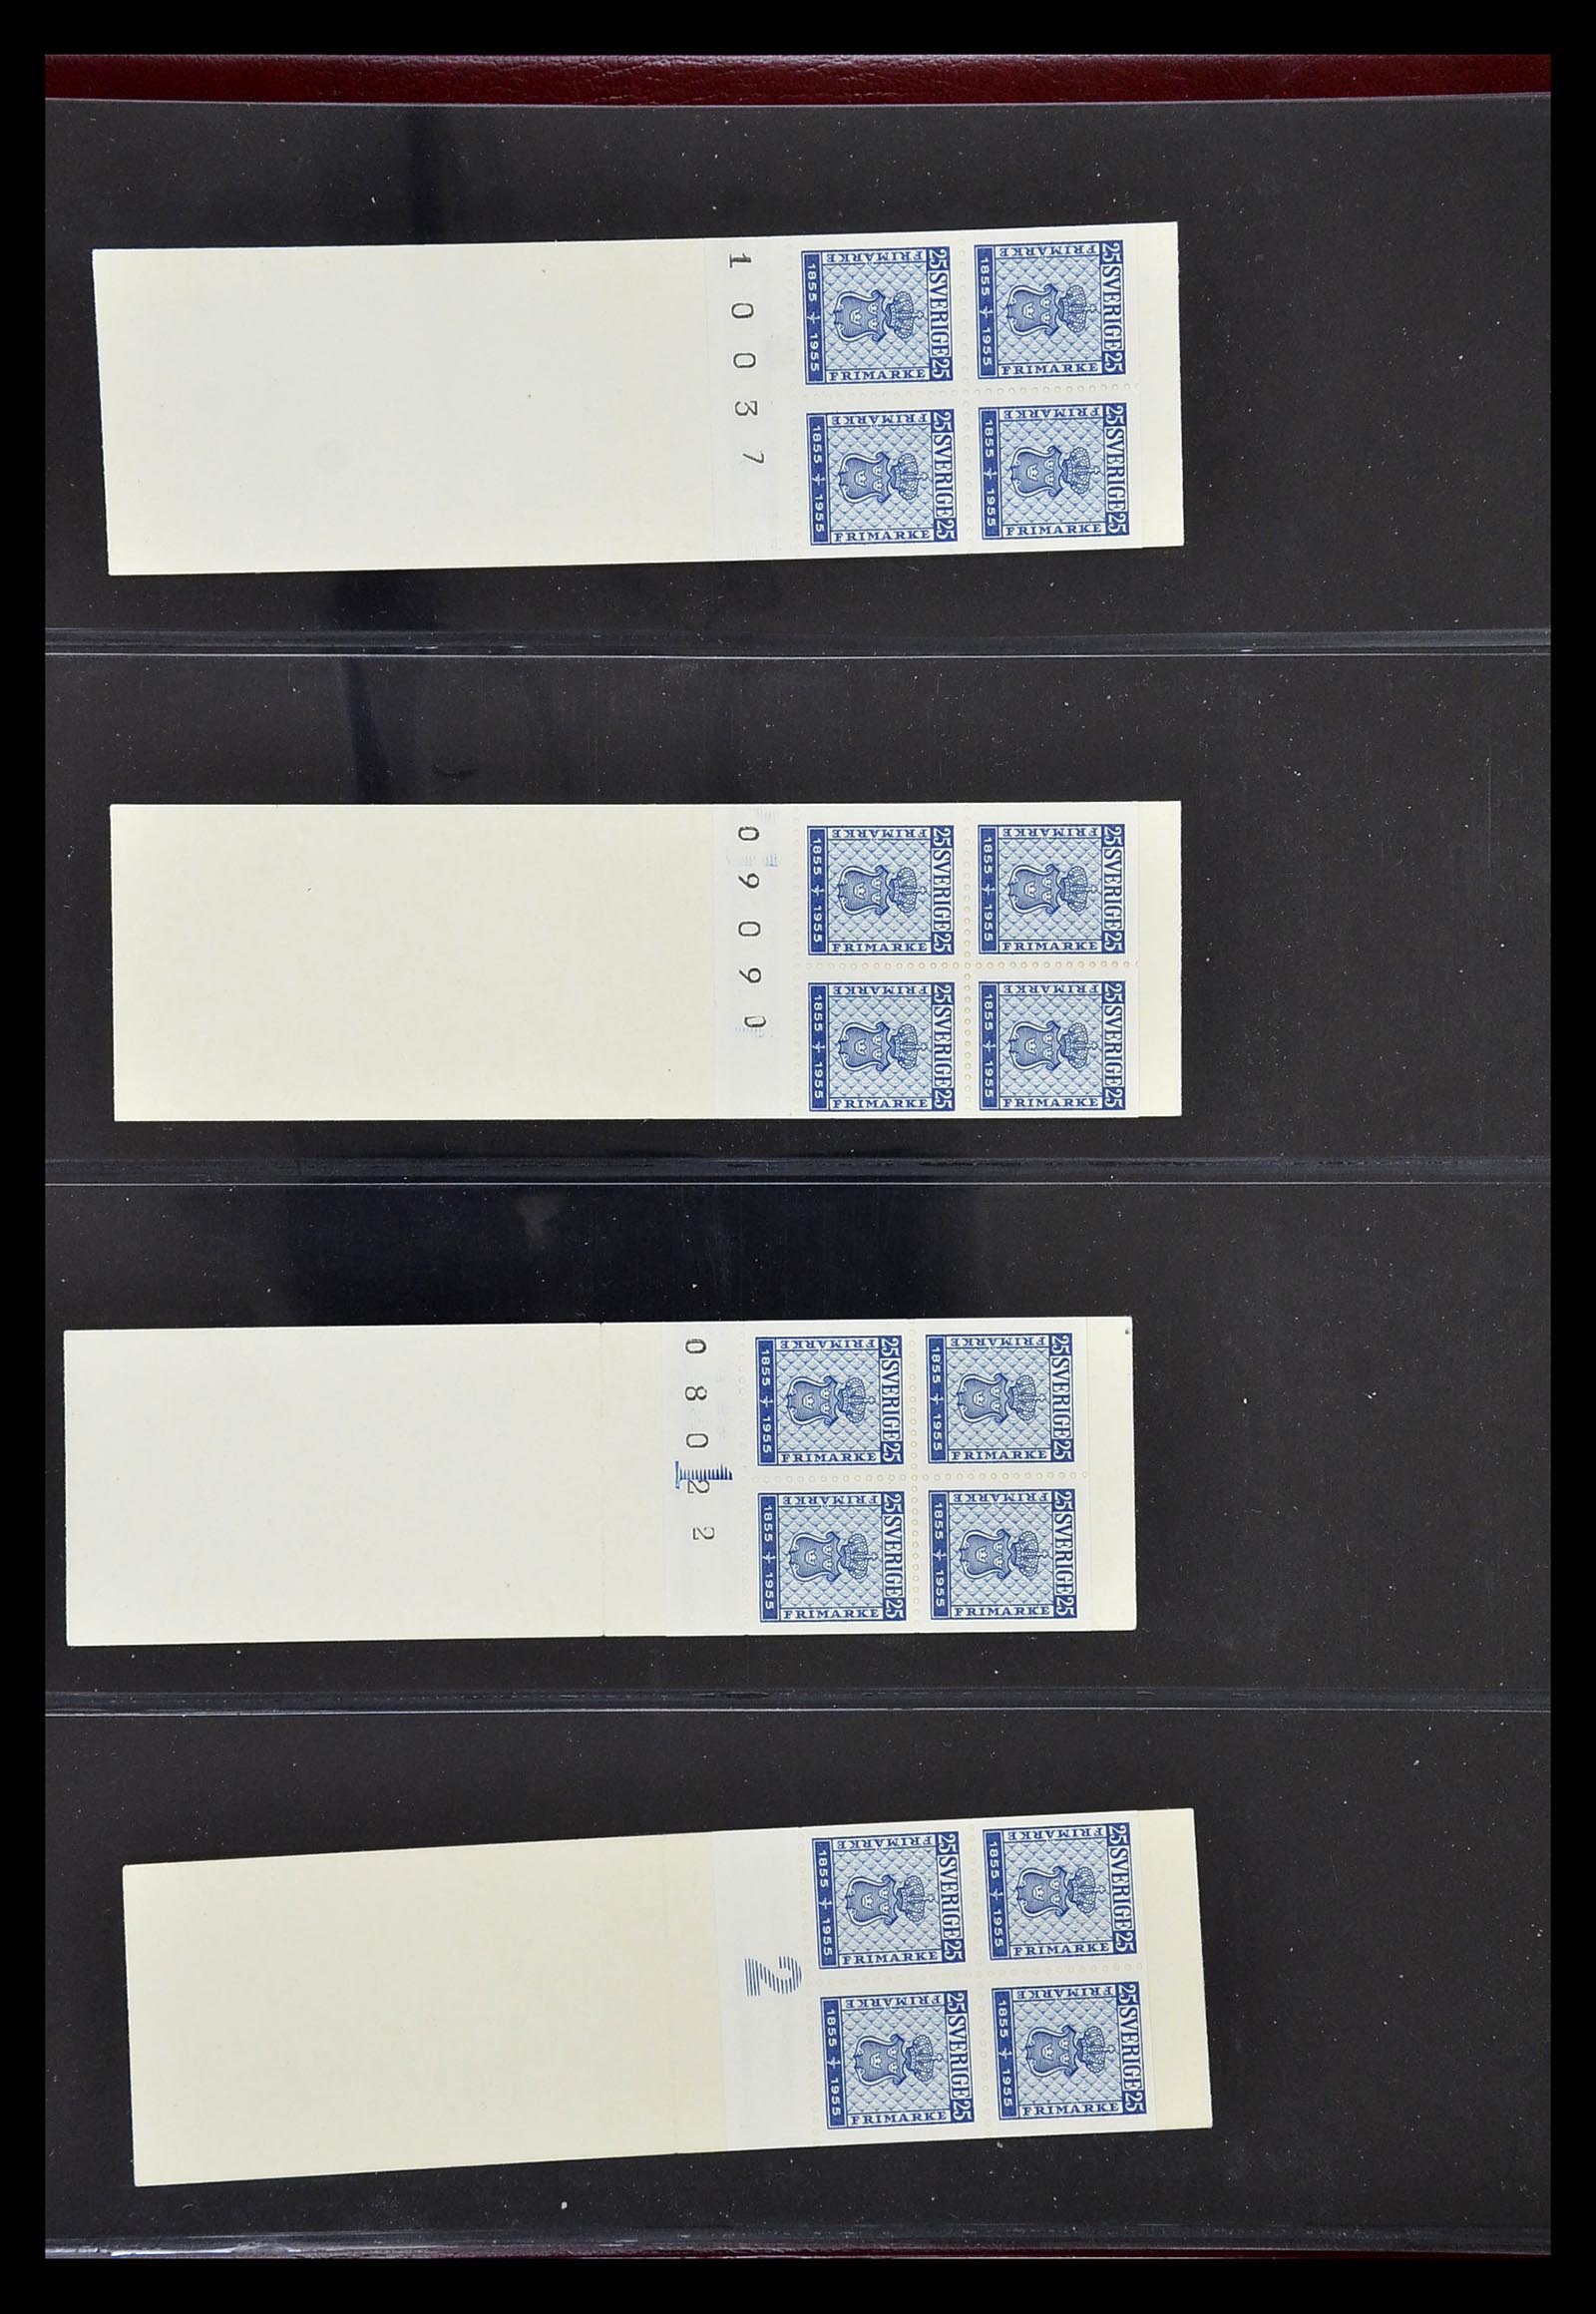 34760 072 - Stamp Collection 34760 Sweden stamp booklets 1945-1973.